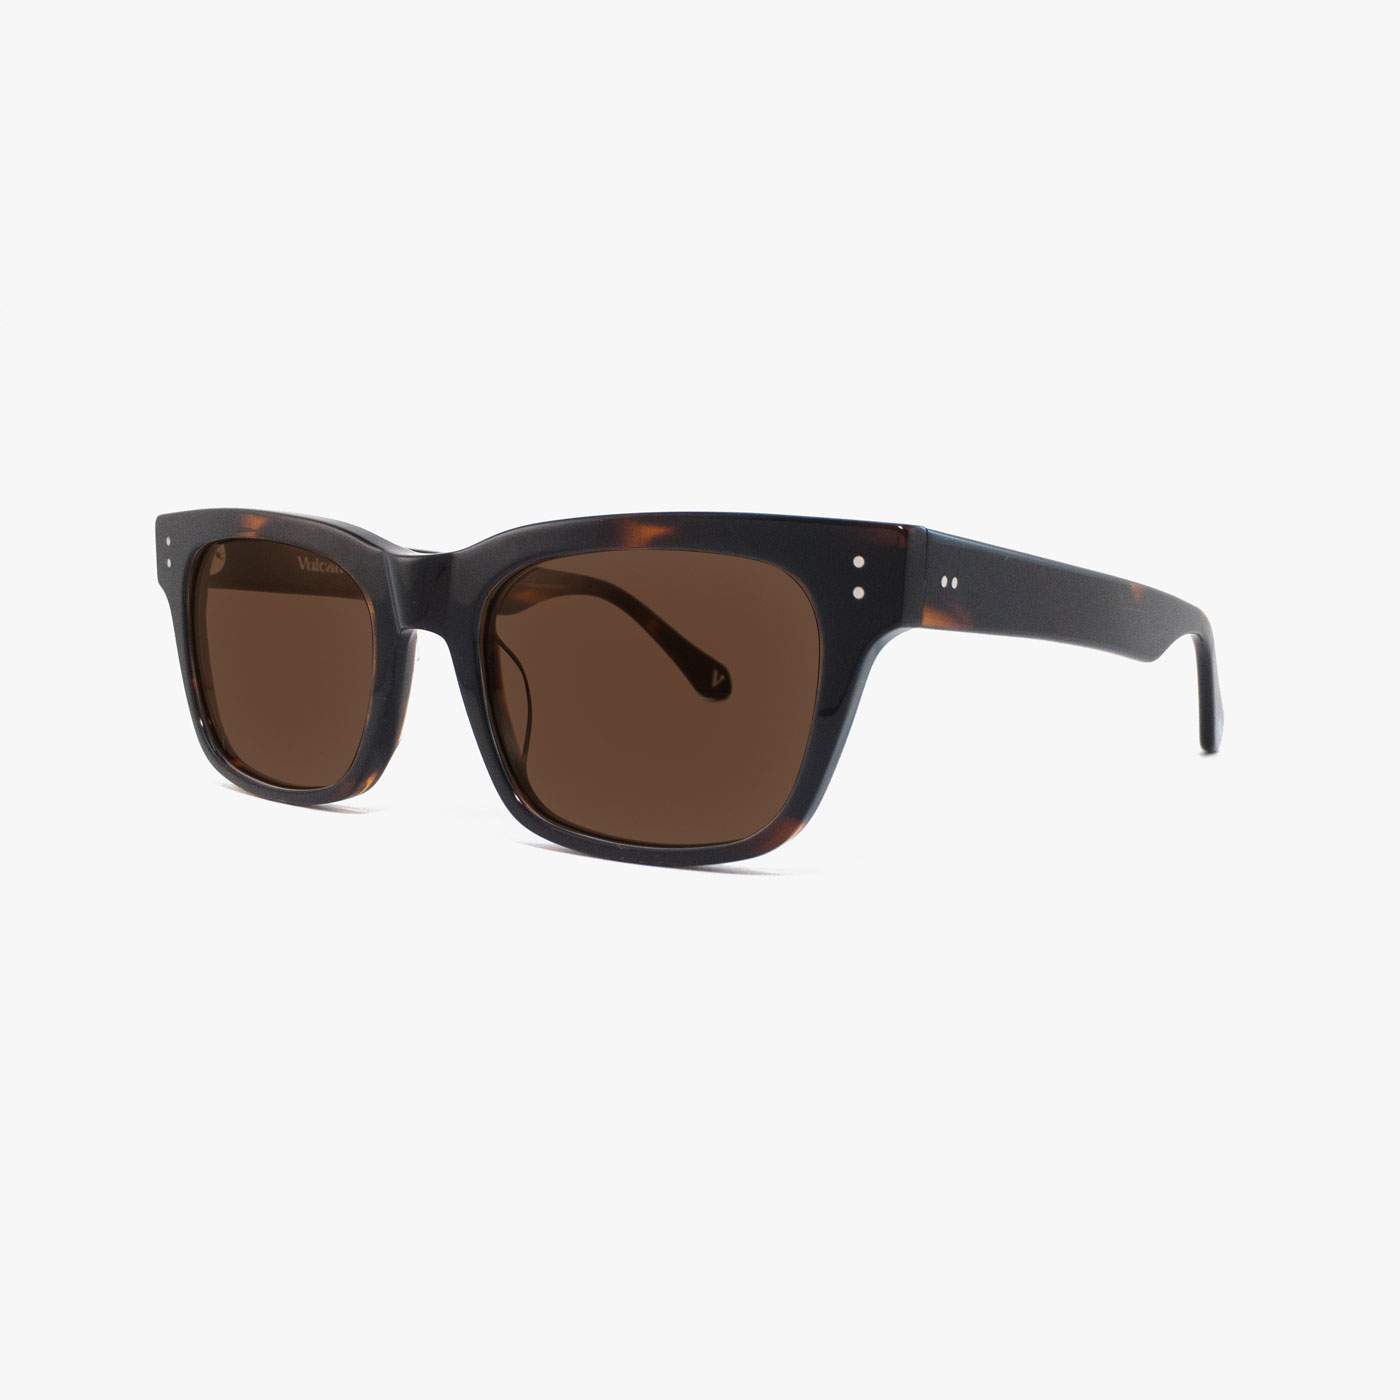 Alphine Wide Polarized Sunglasses, Alphine W - Brown